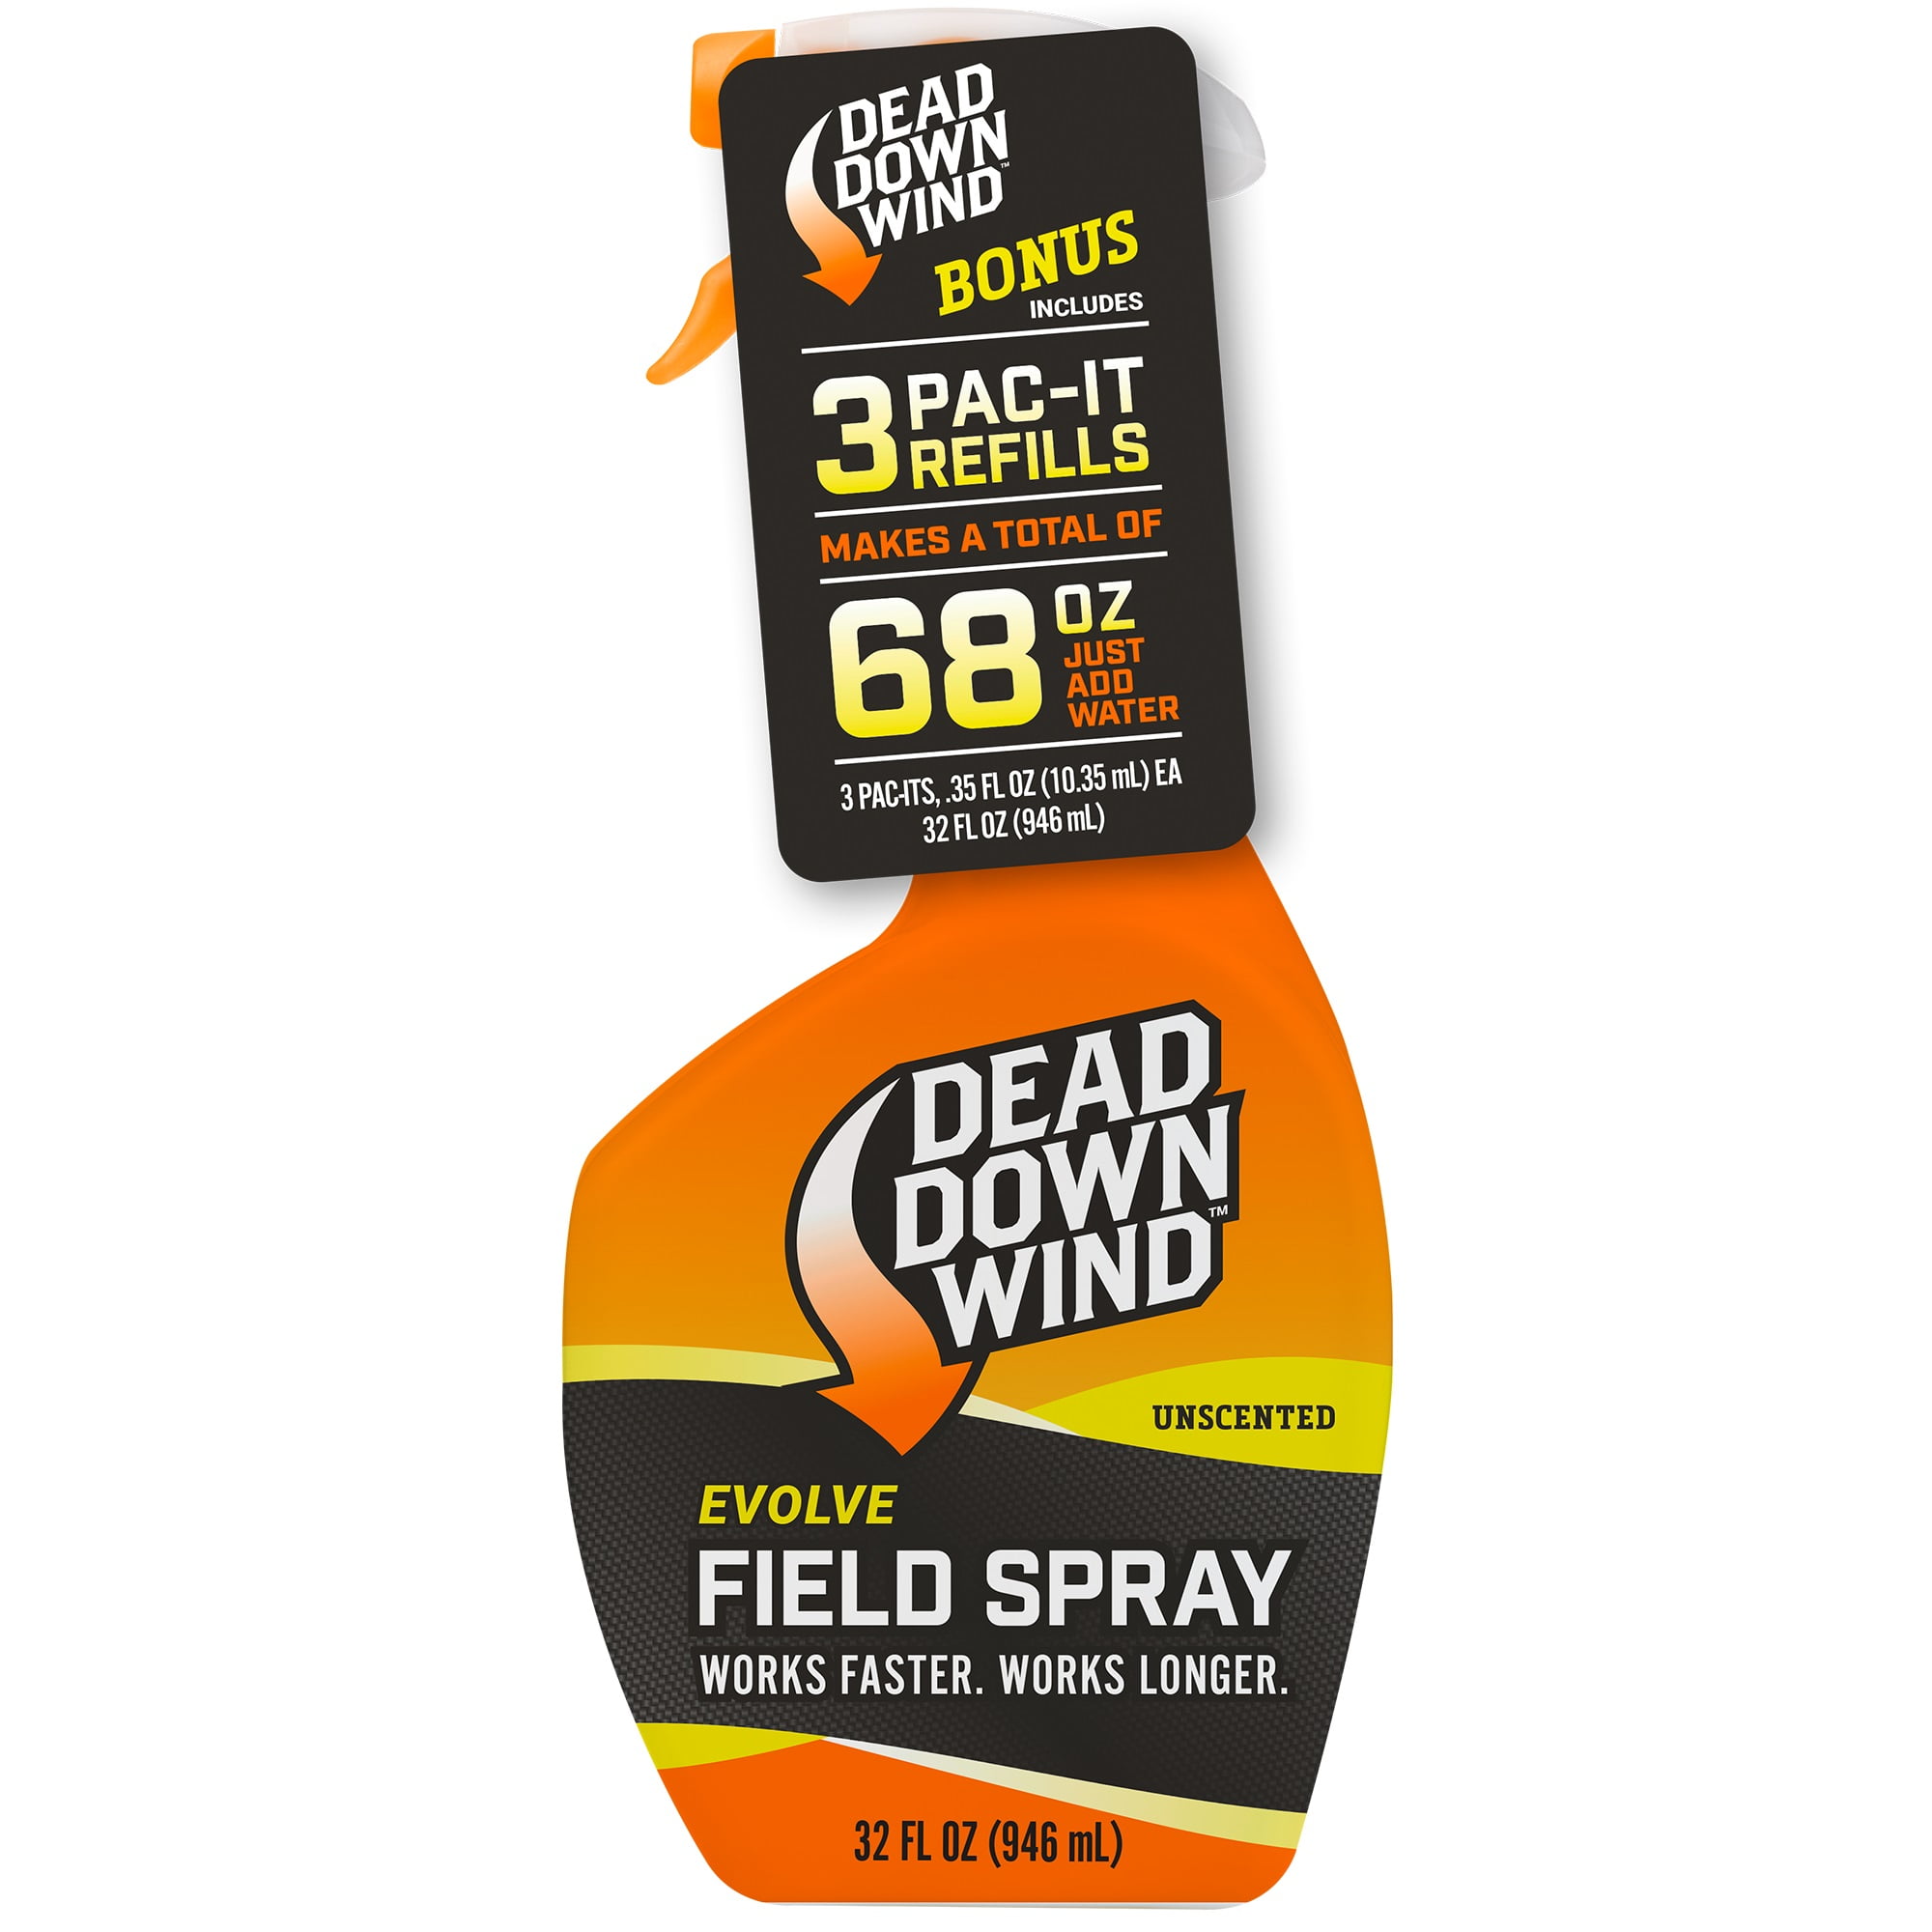 Dead Down Wind Mens Antiperspirant Deodorant Stick